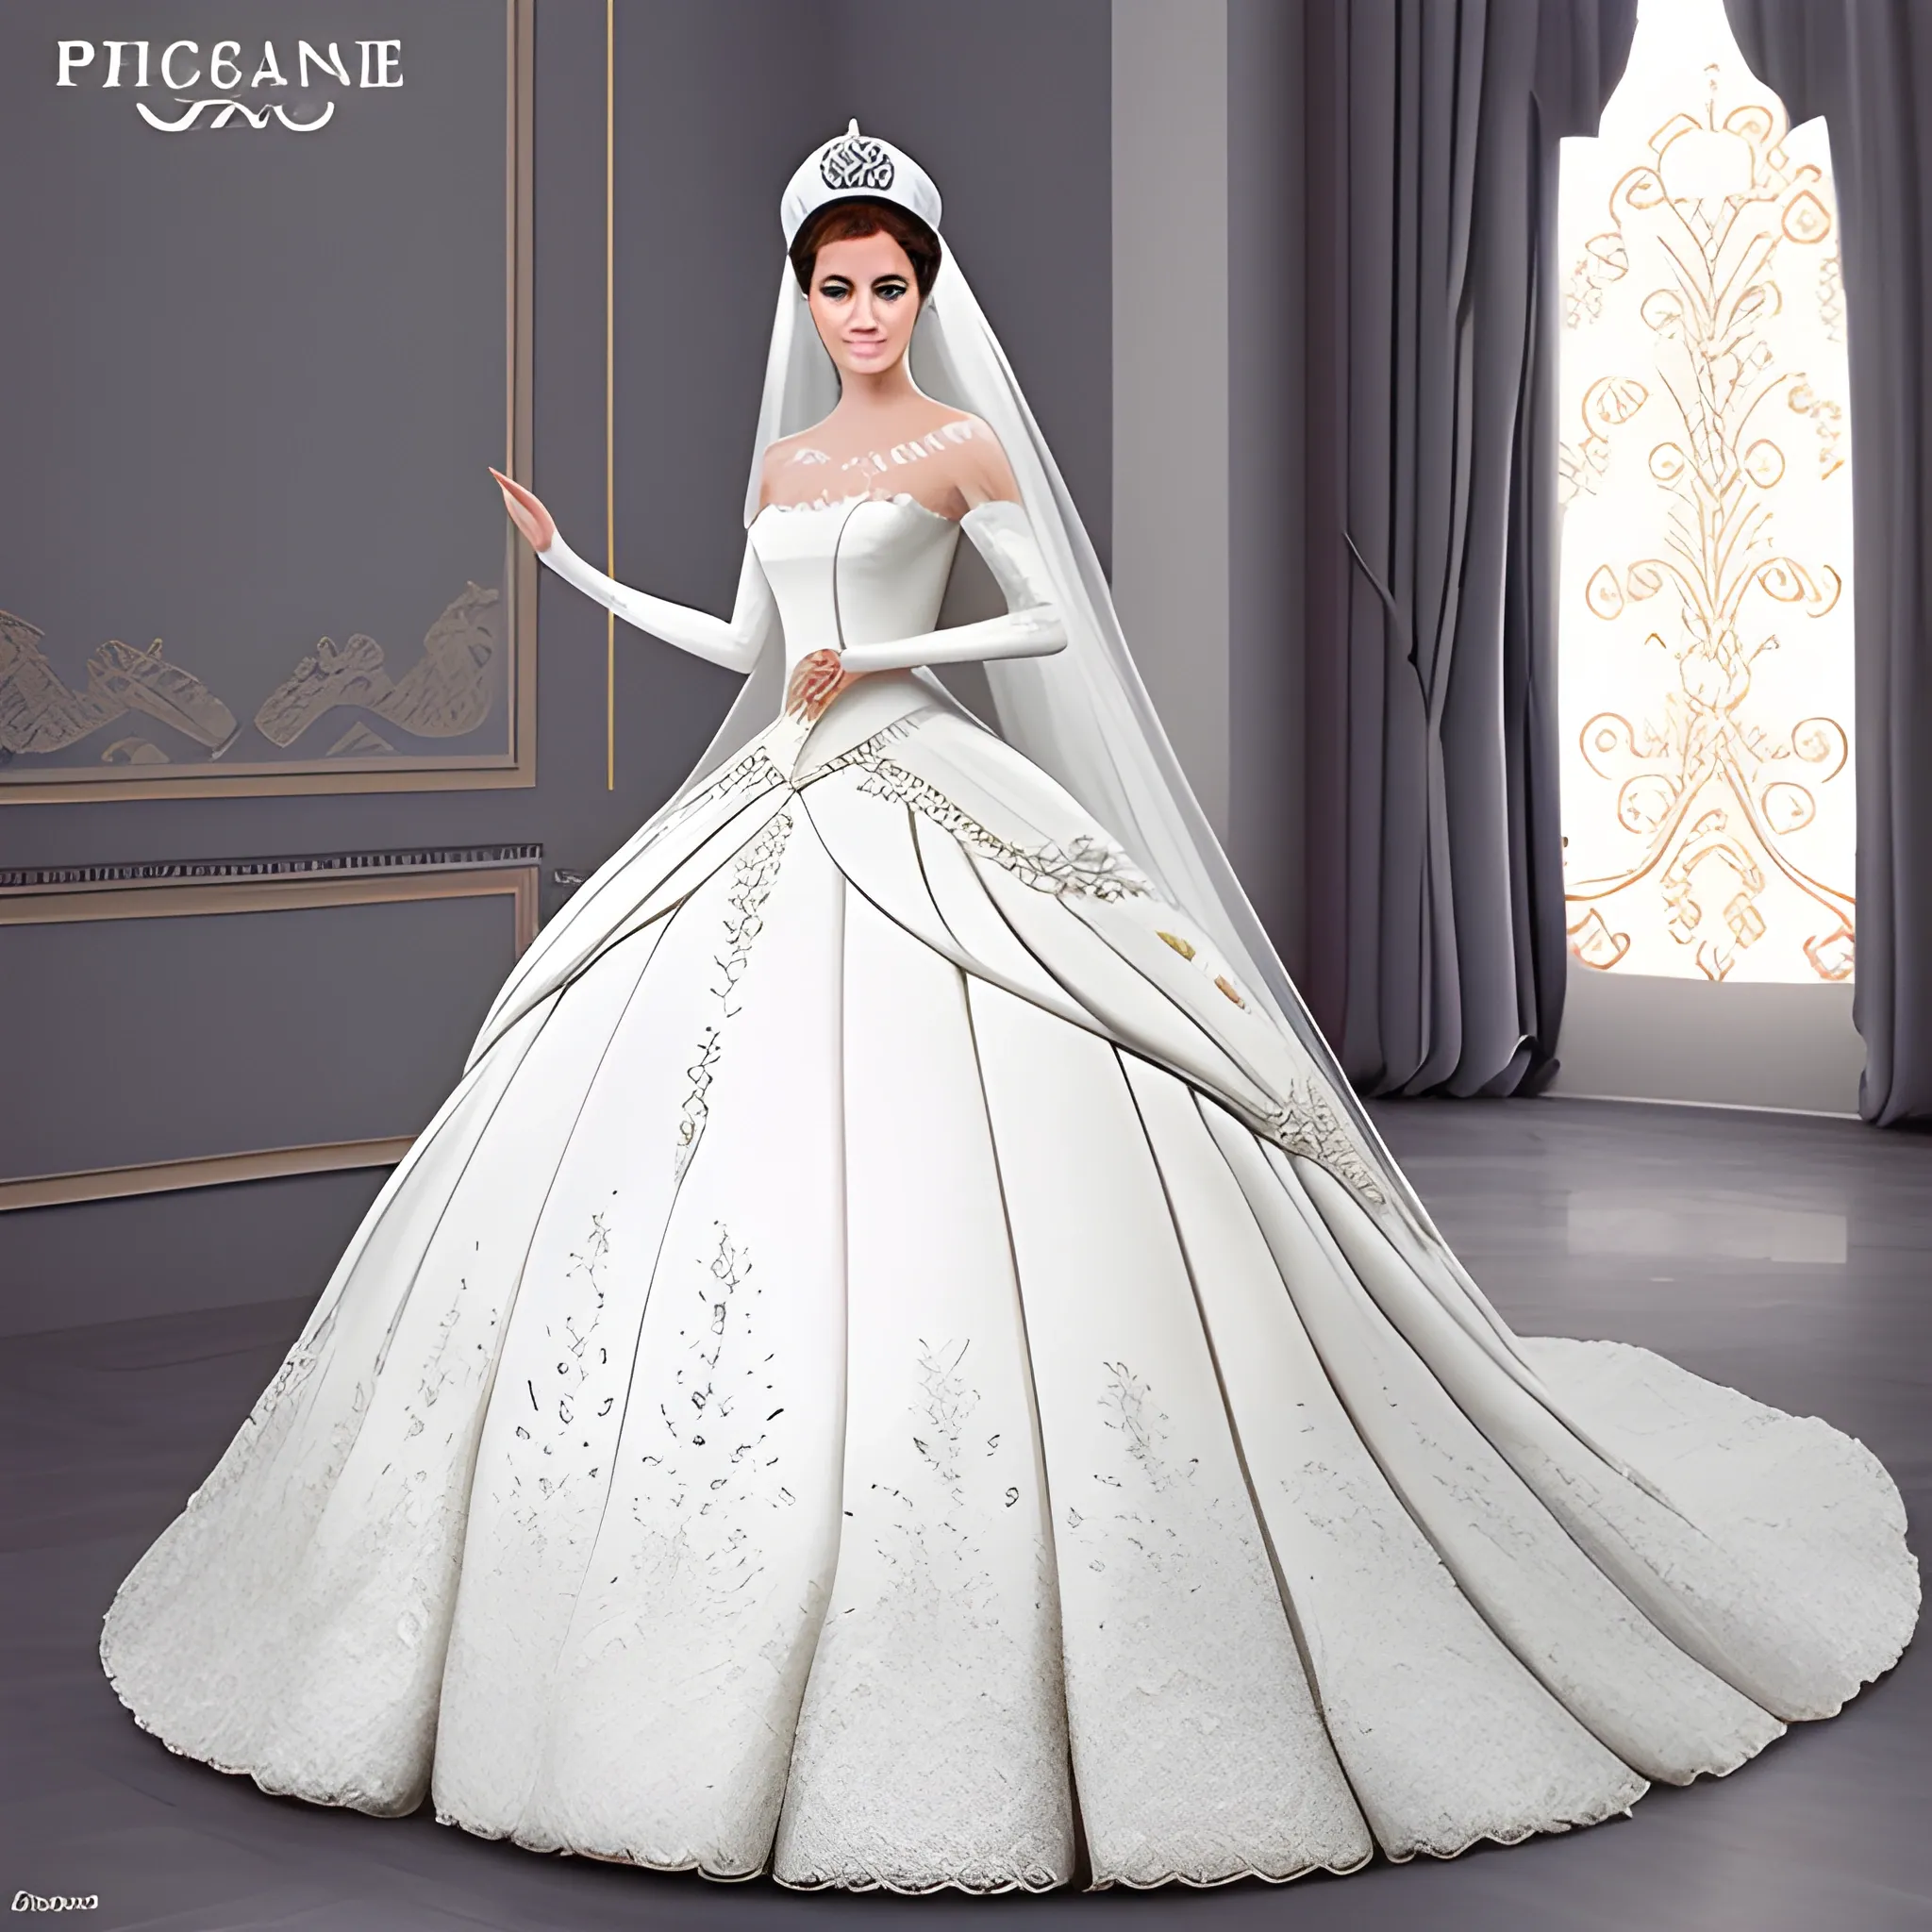 princess wedding dress majestic realistic extravagant design